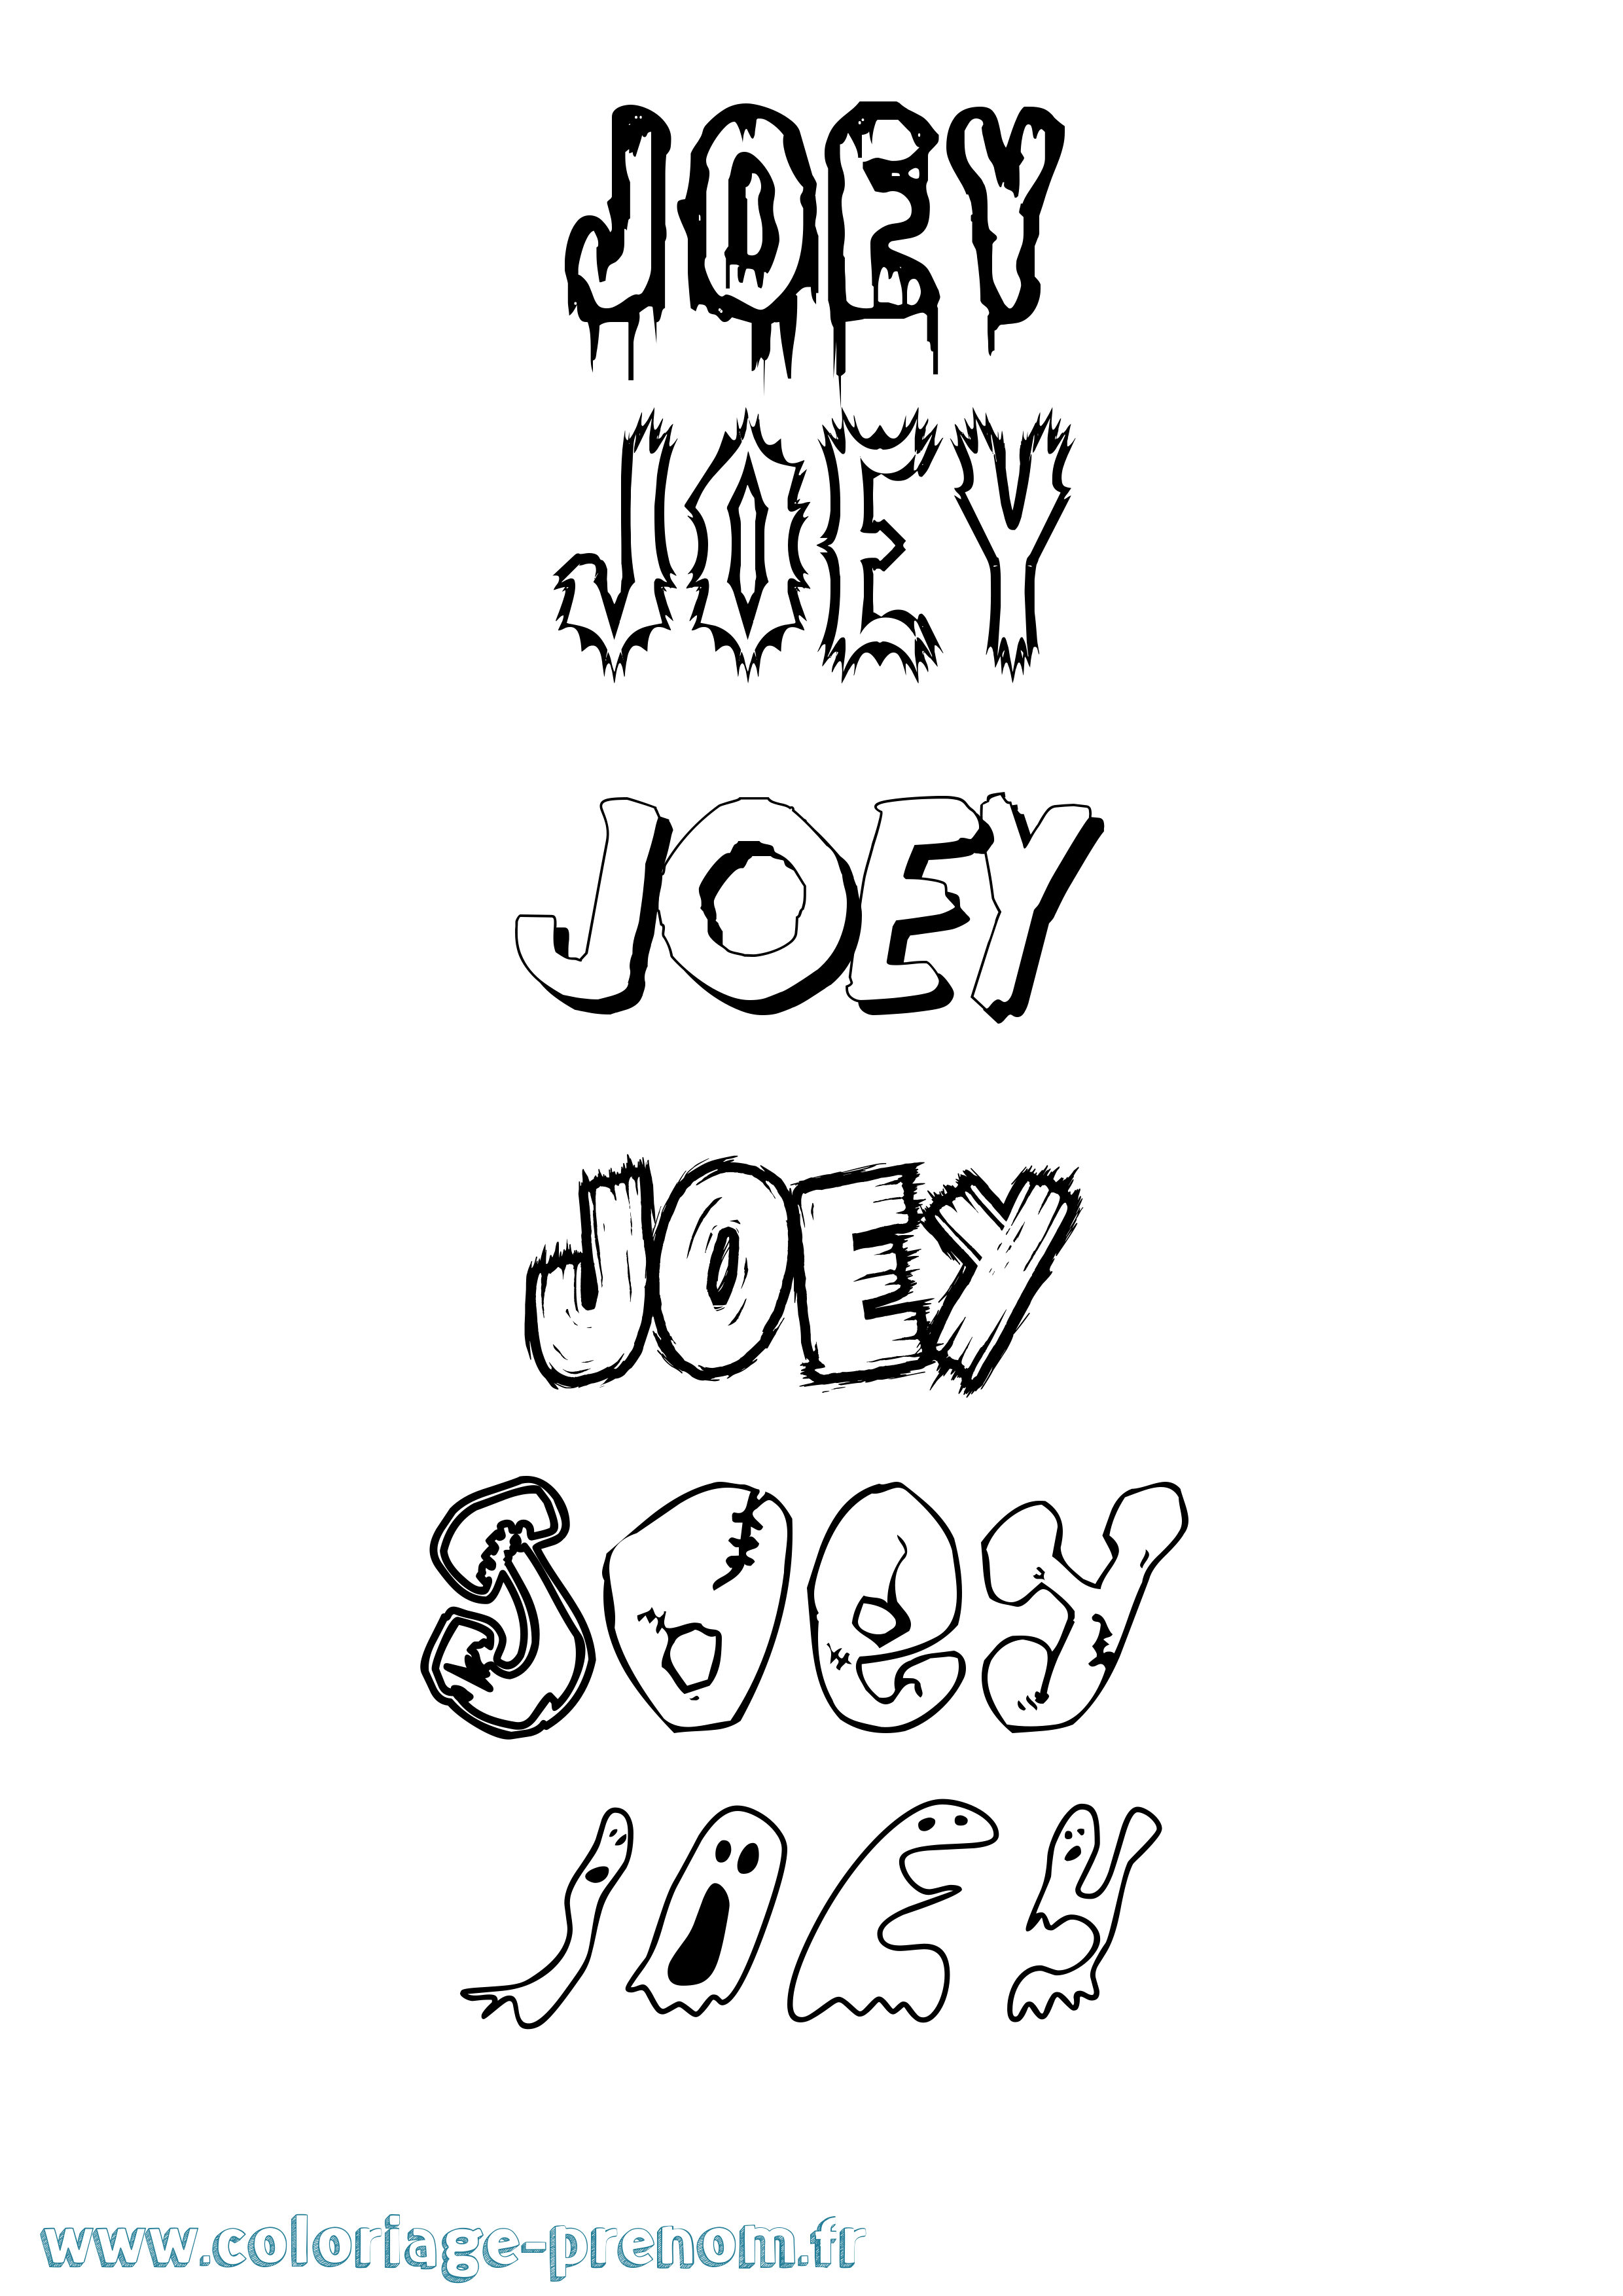 Coloriage prénom Joey Frisson